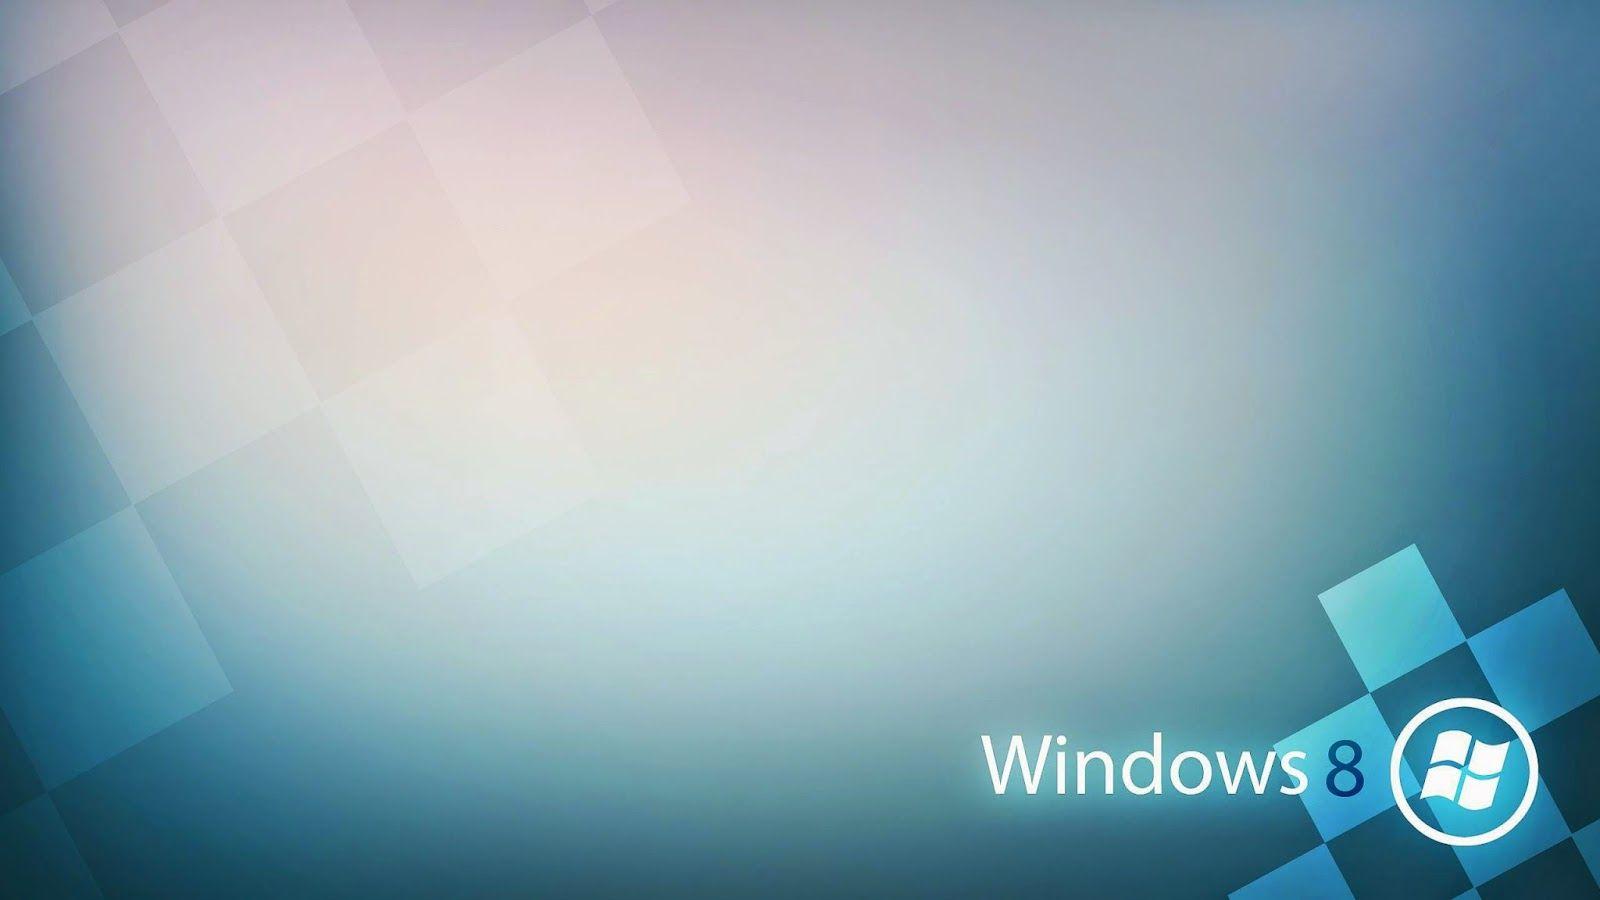 Latest Windows 8 full HD wallpaper new Metro look blue black theme